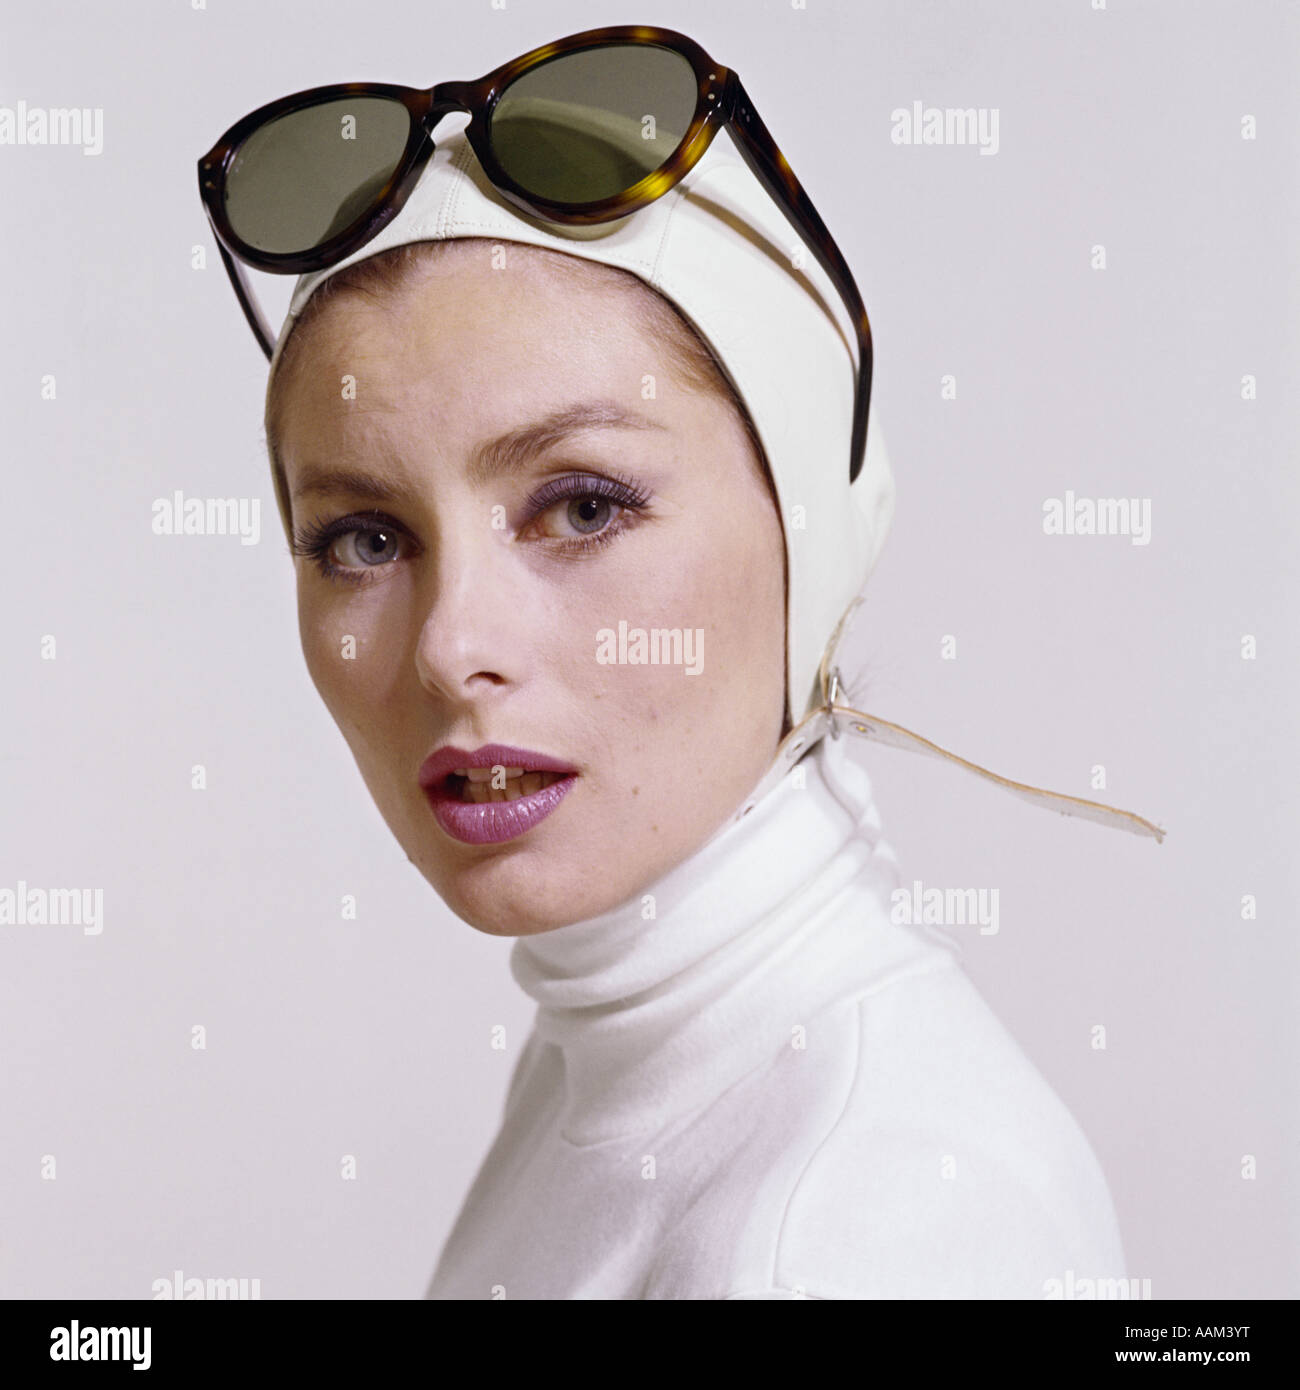 1970s PORTRAIT WOMAN WHITE TURTLE NECK WHITE AVIATOR HELMET HAT STRAP FASHION BEAUTY STYLE SUNGLASSES PUSH UP ON HEAD Stock Photo